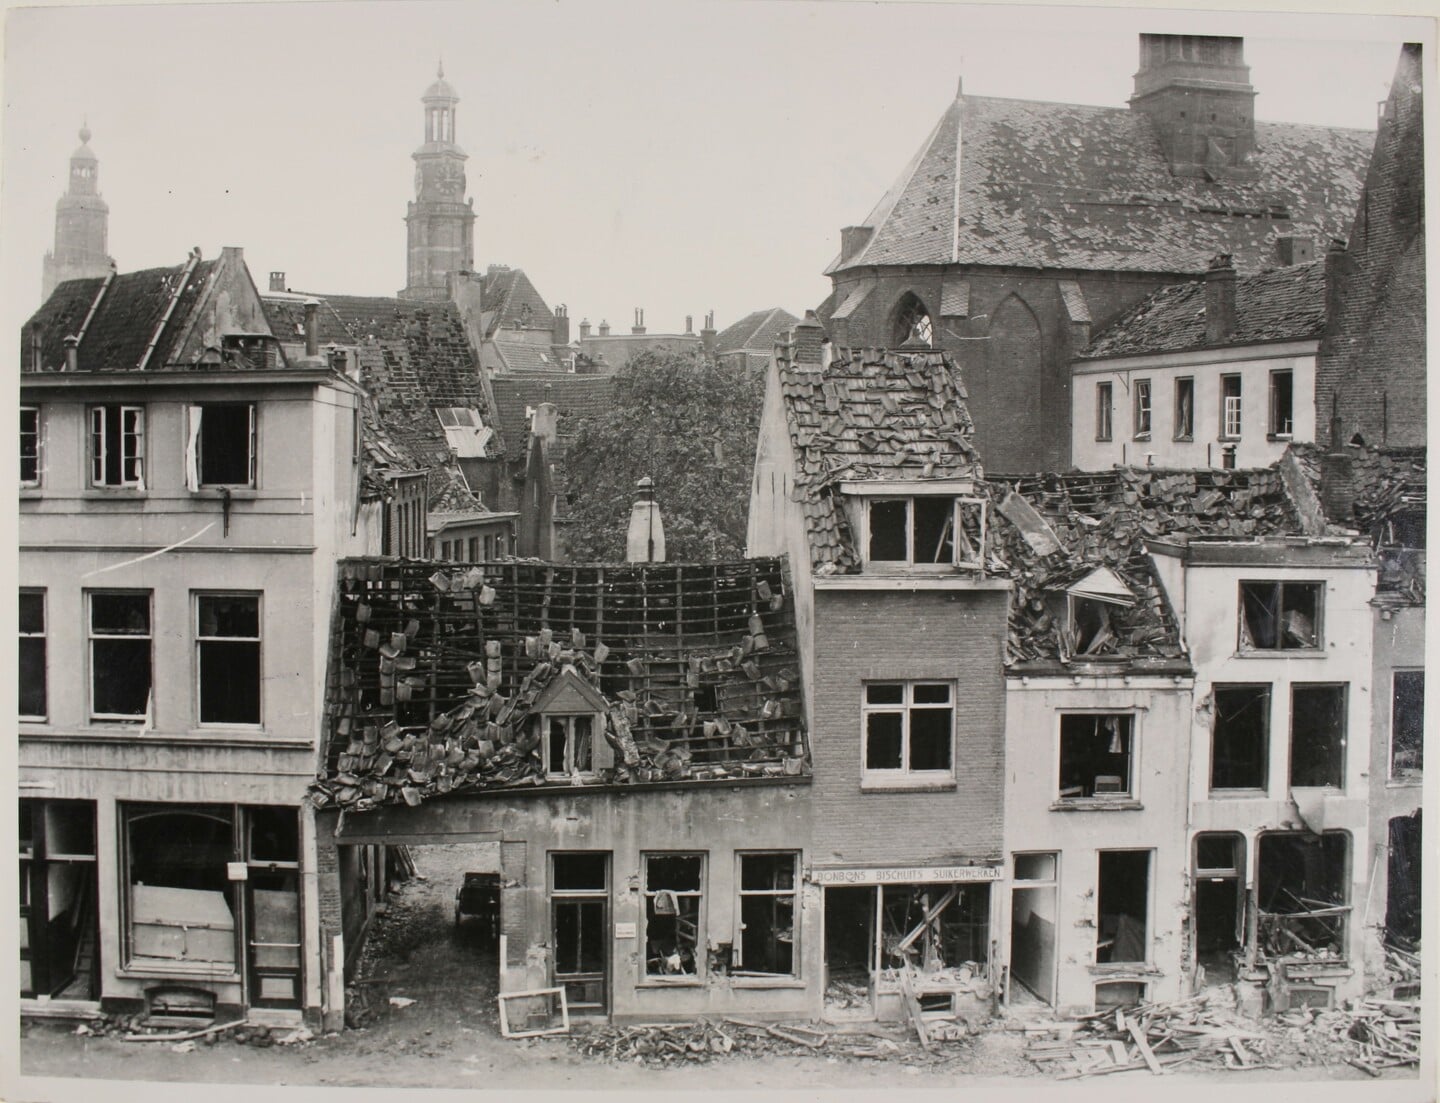 Café Citybar na de verwoesting in oktober 1944. Hier was Joop Gianotten kroegbaas. Foto: archief